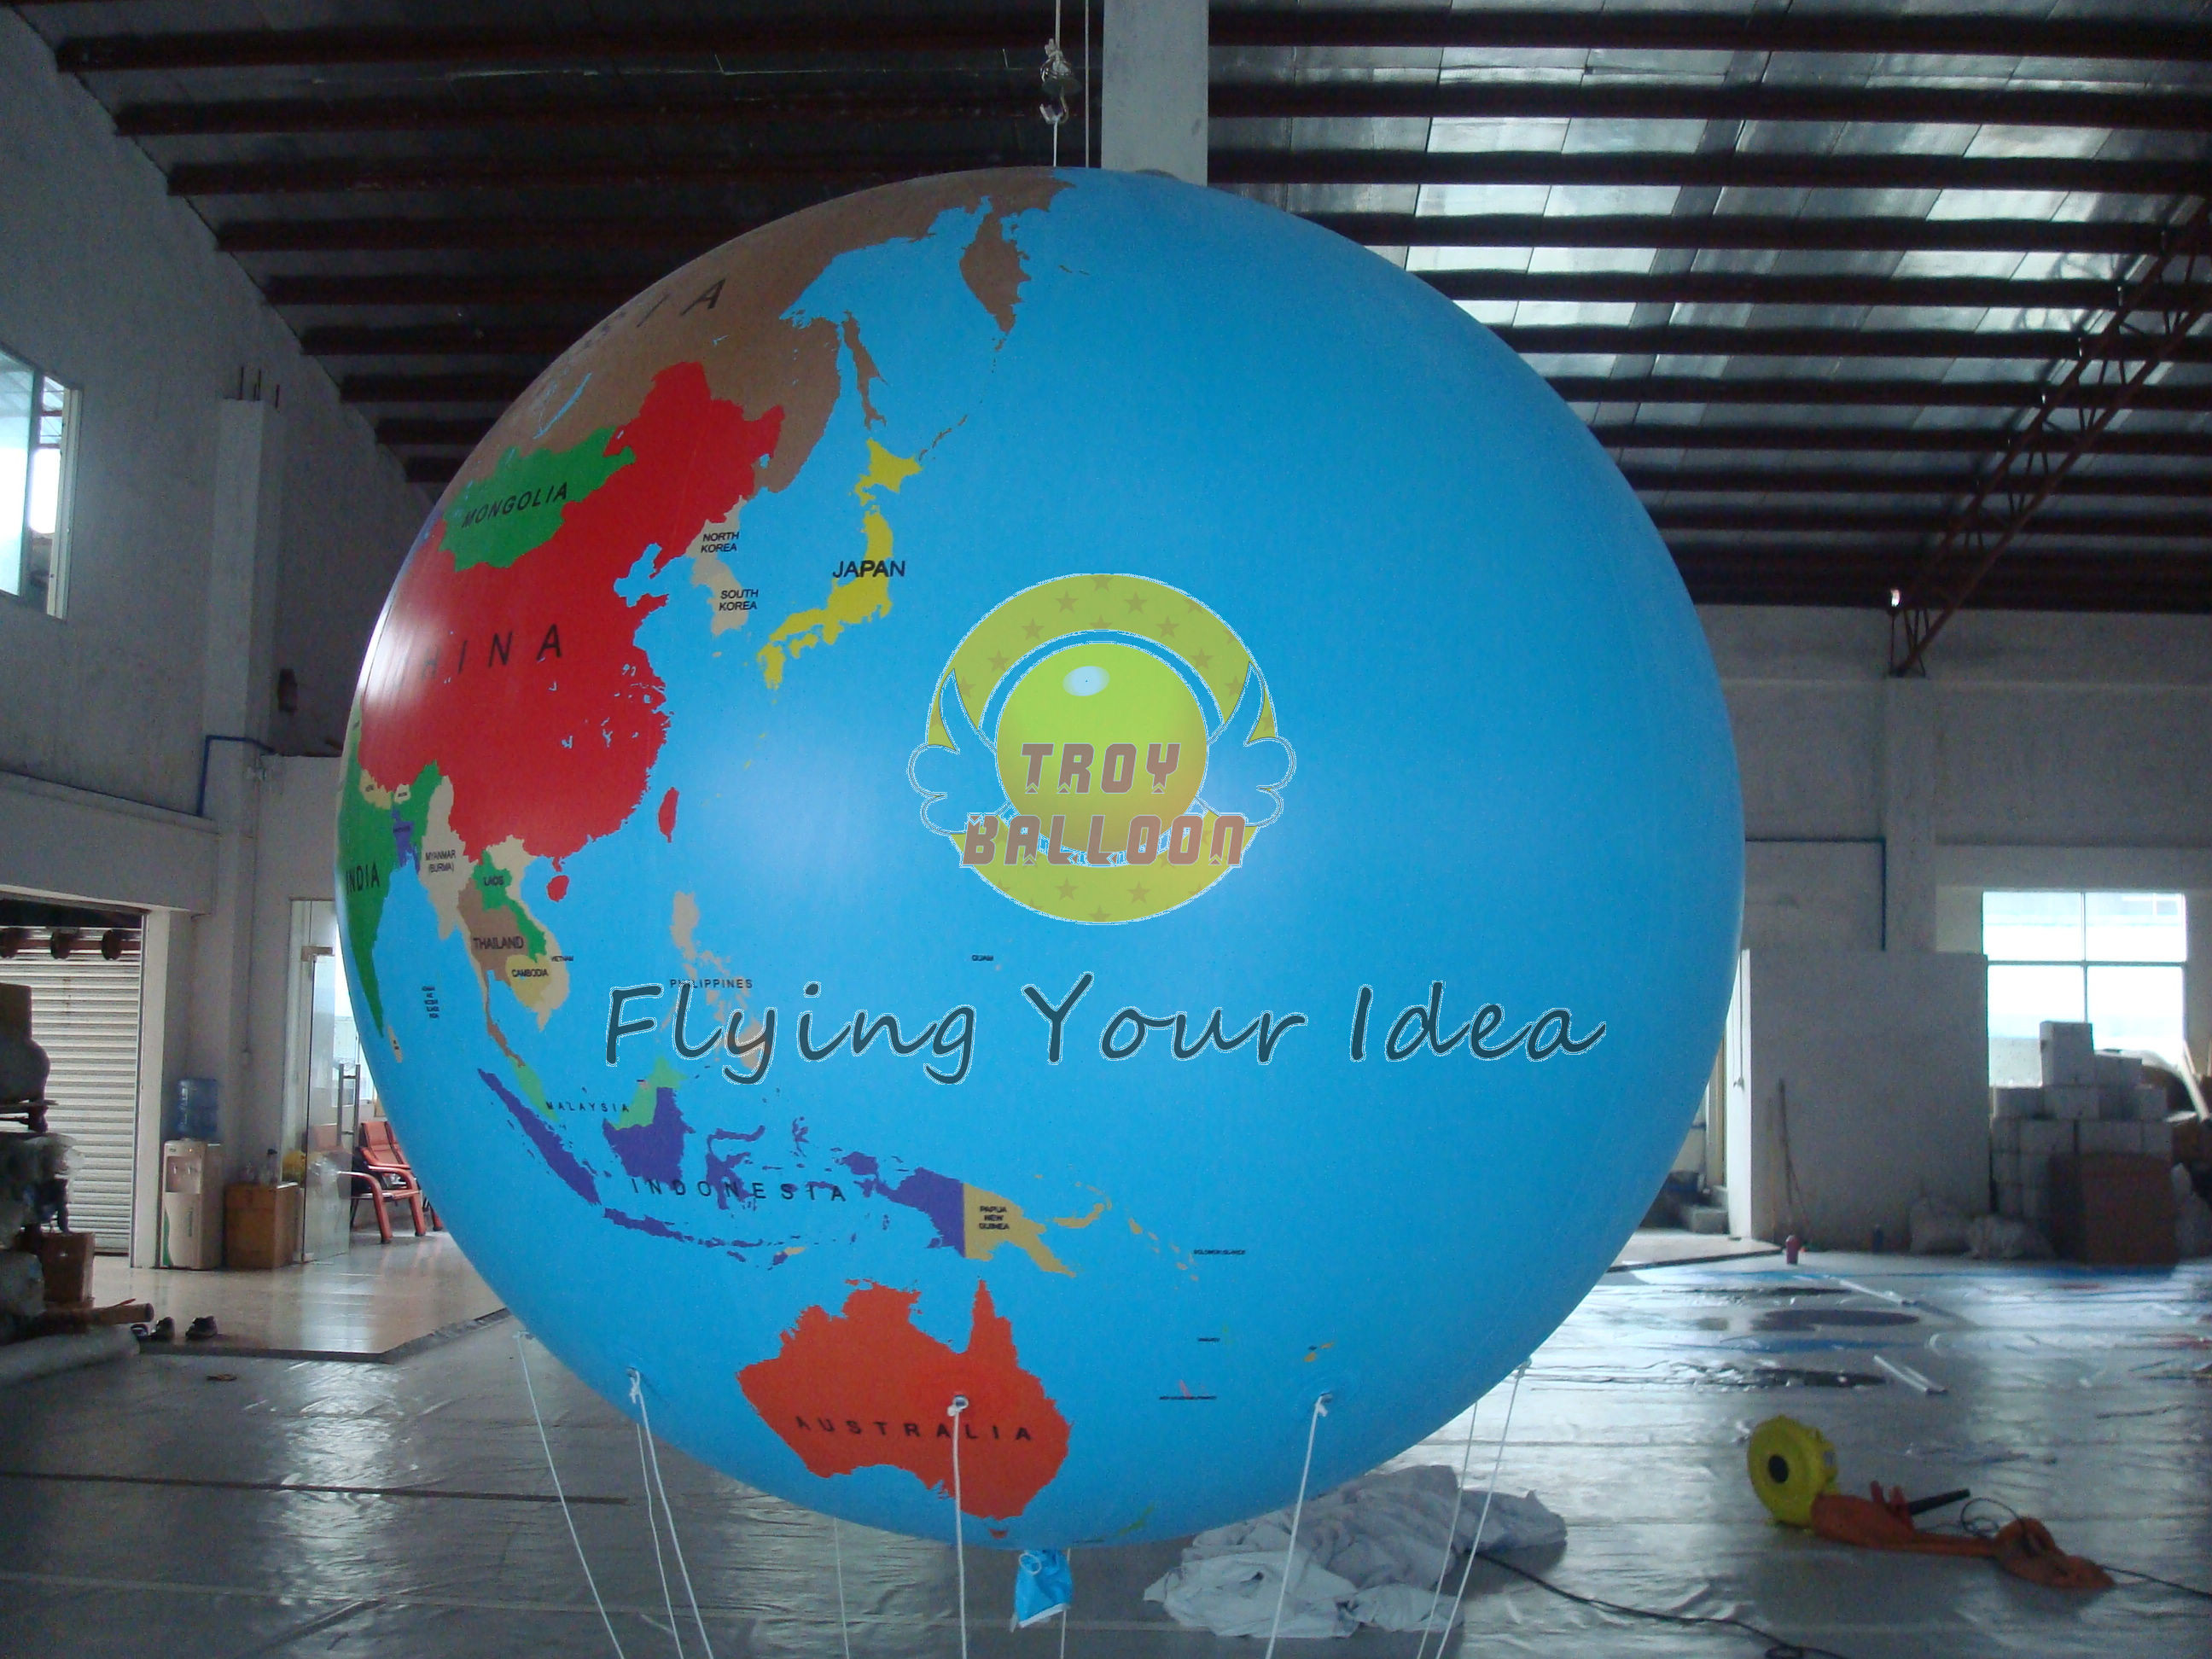 China Durable Earth Balloons Globe wholesale